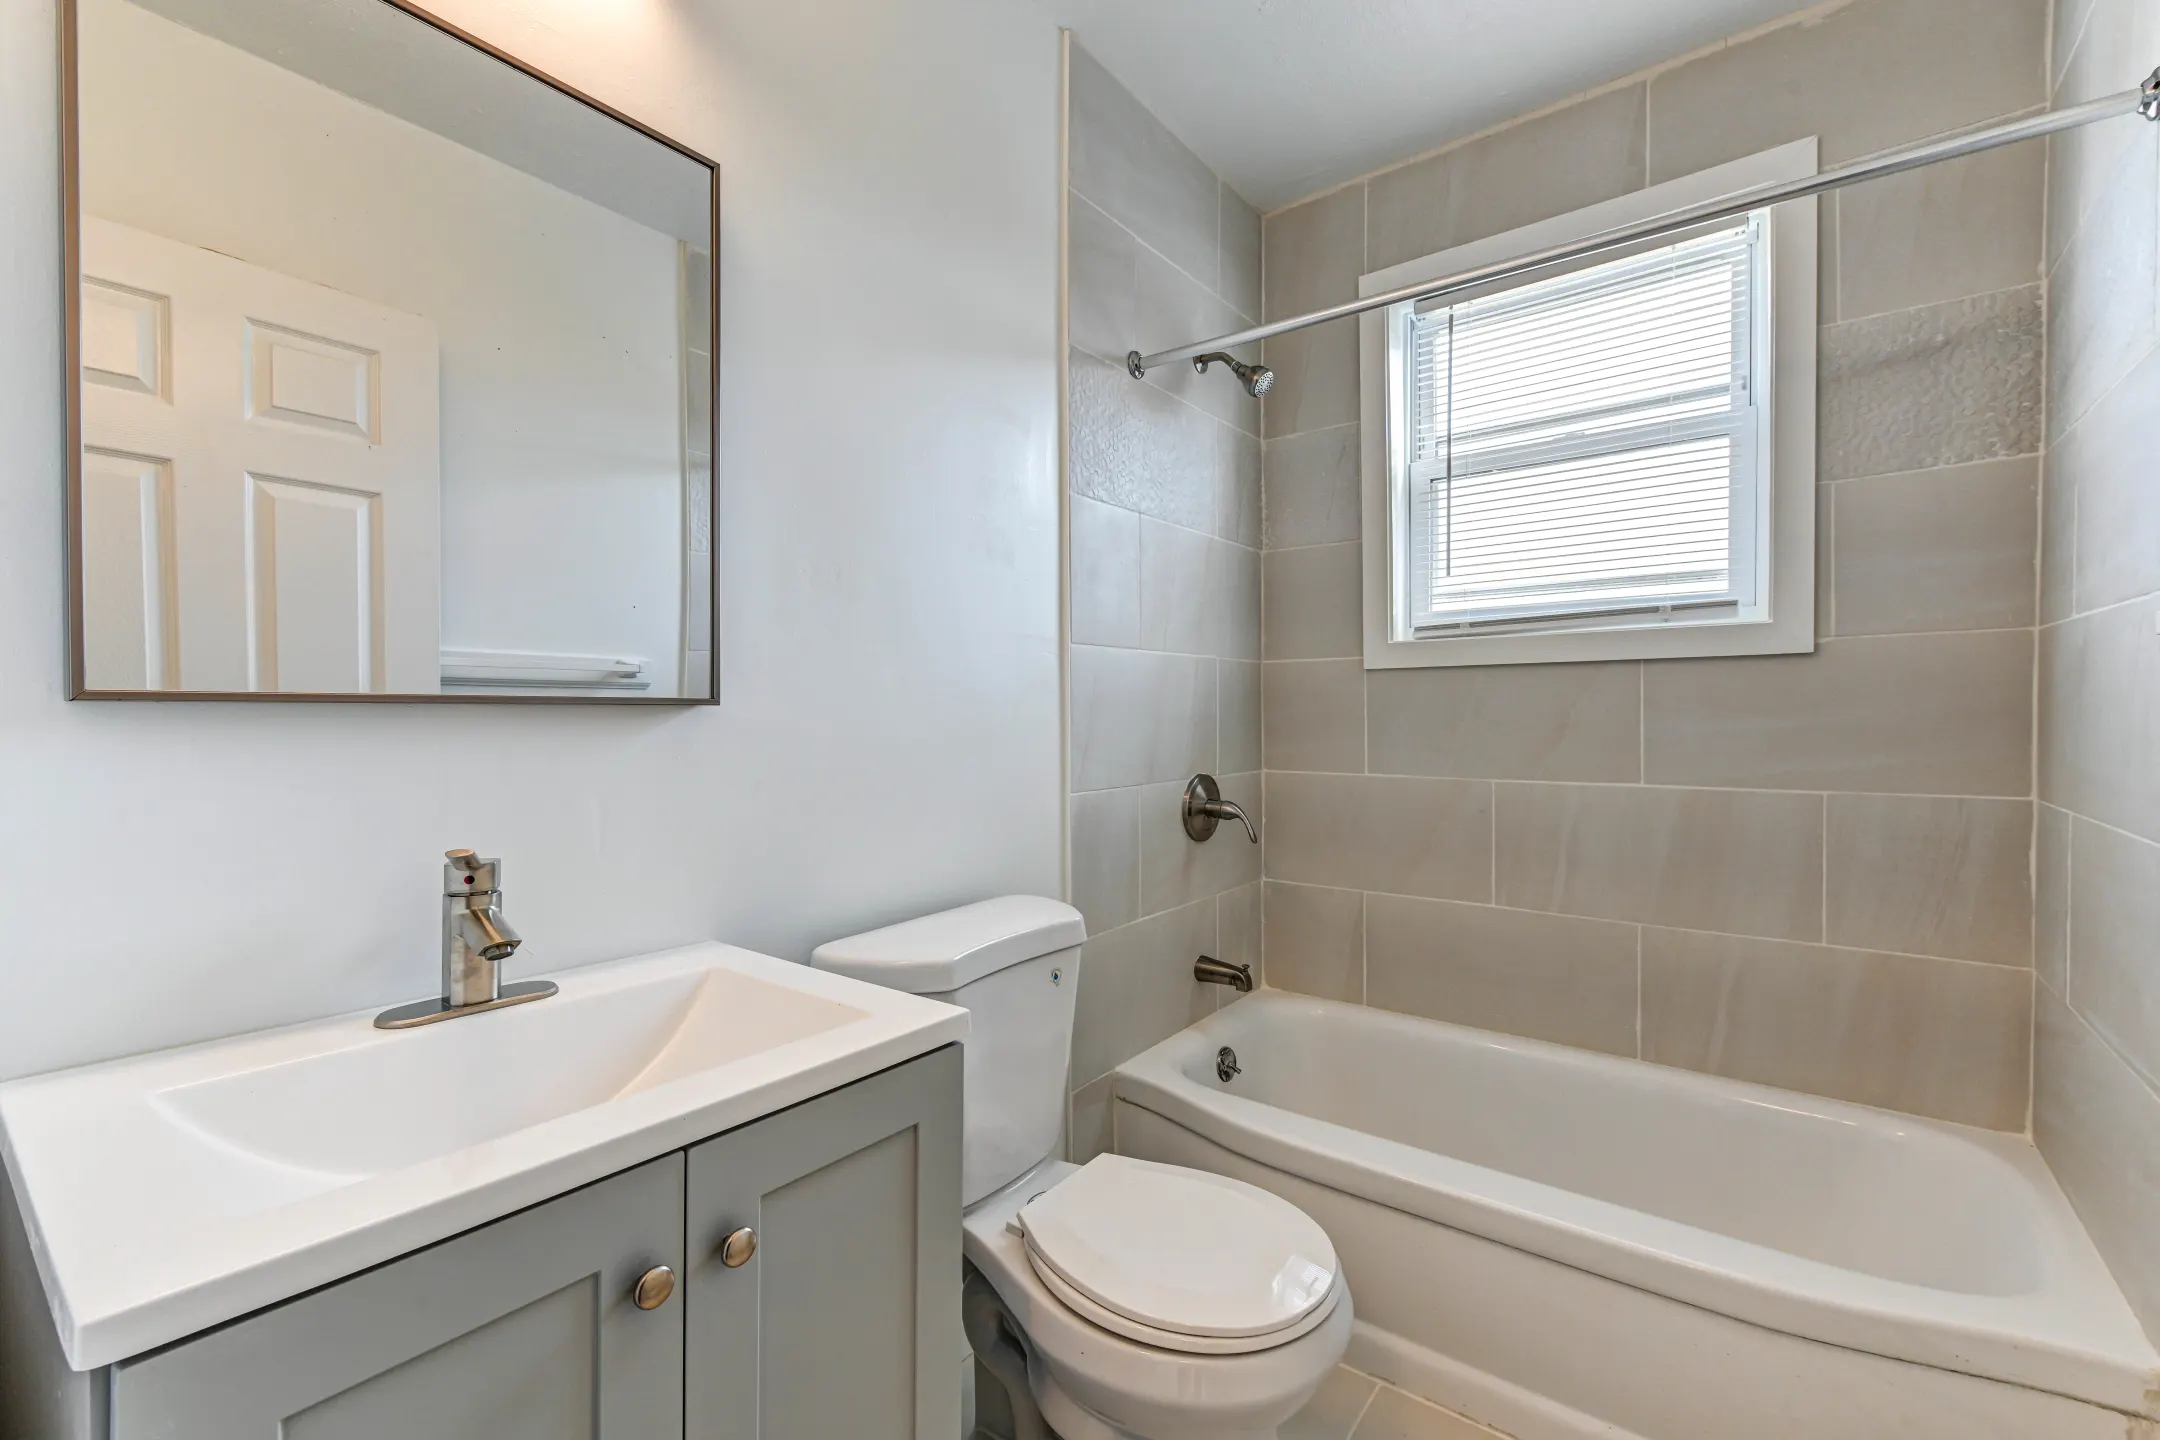 Bathroom - Mount Vernon Gardens - Glenside, PA